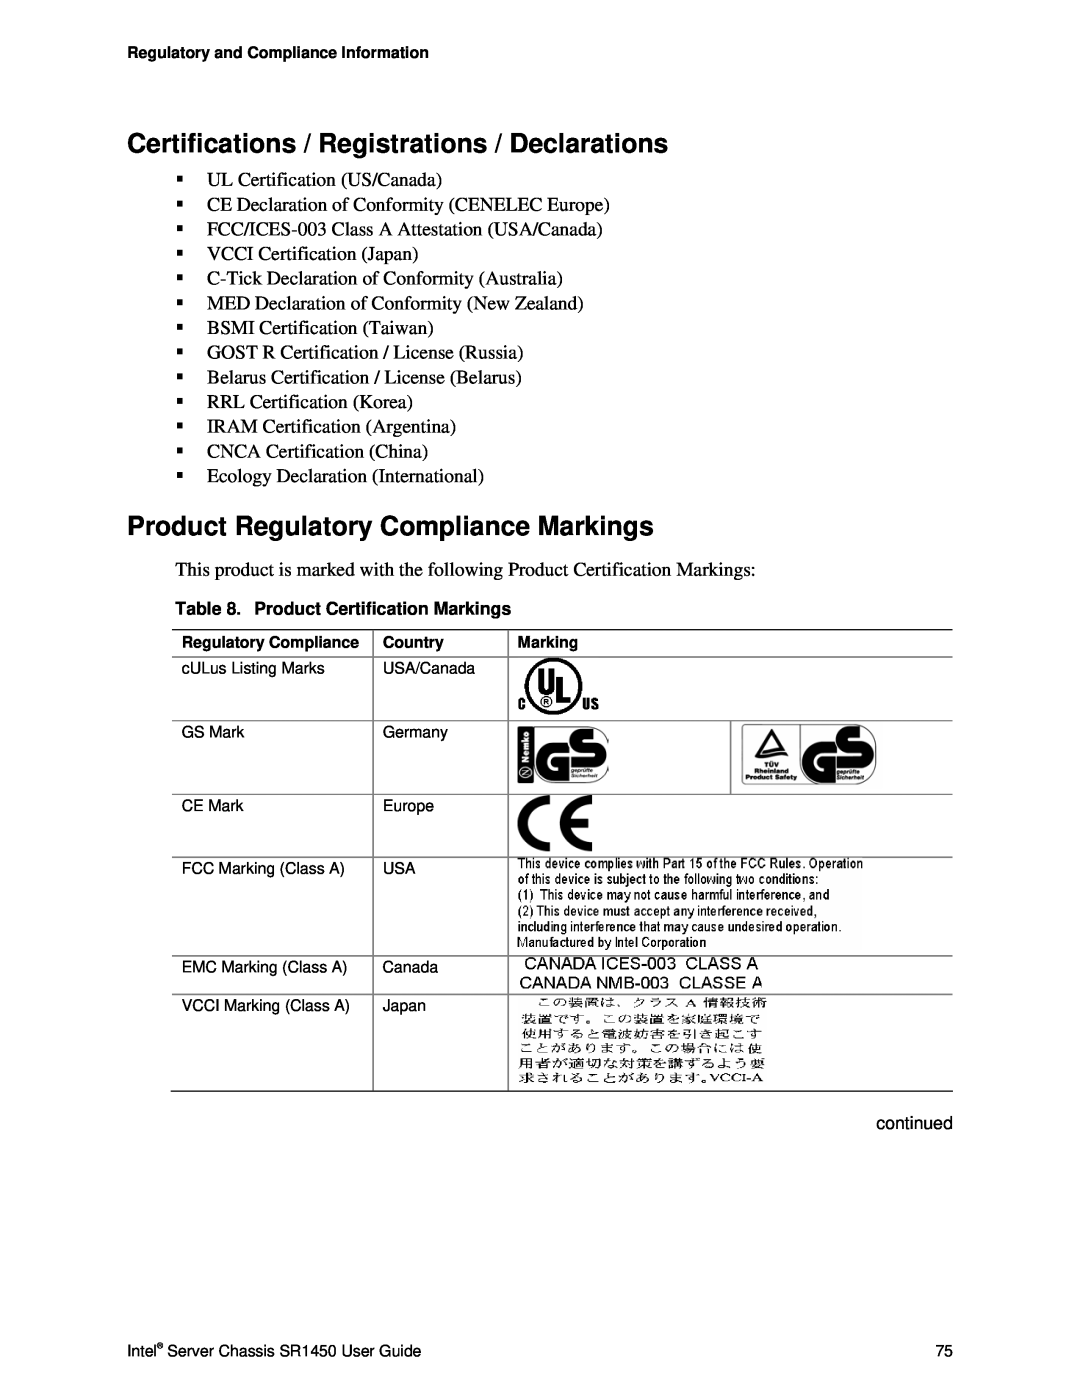 Intel SR1450 manual Certifications / Registrations / Declarations, Product Regulatory Compliance Markings 